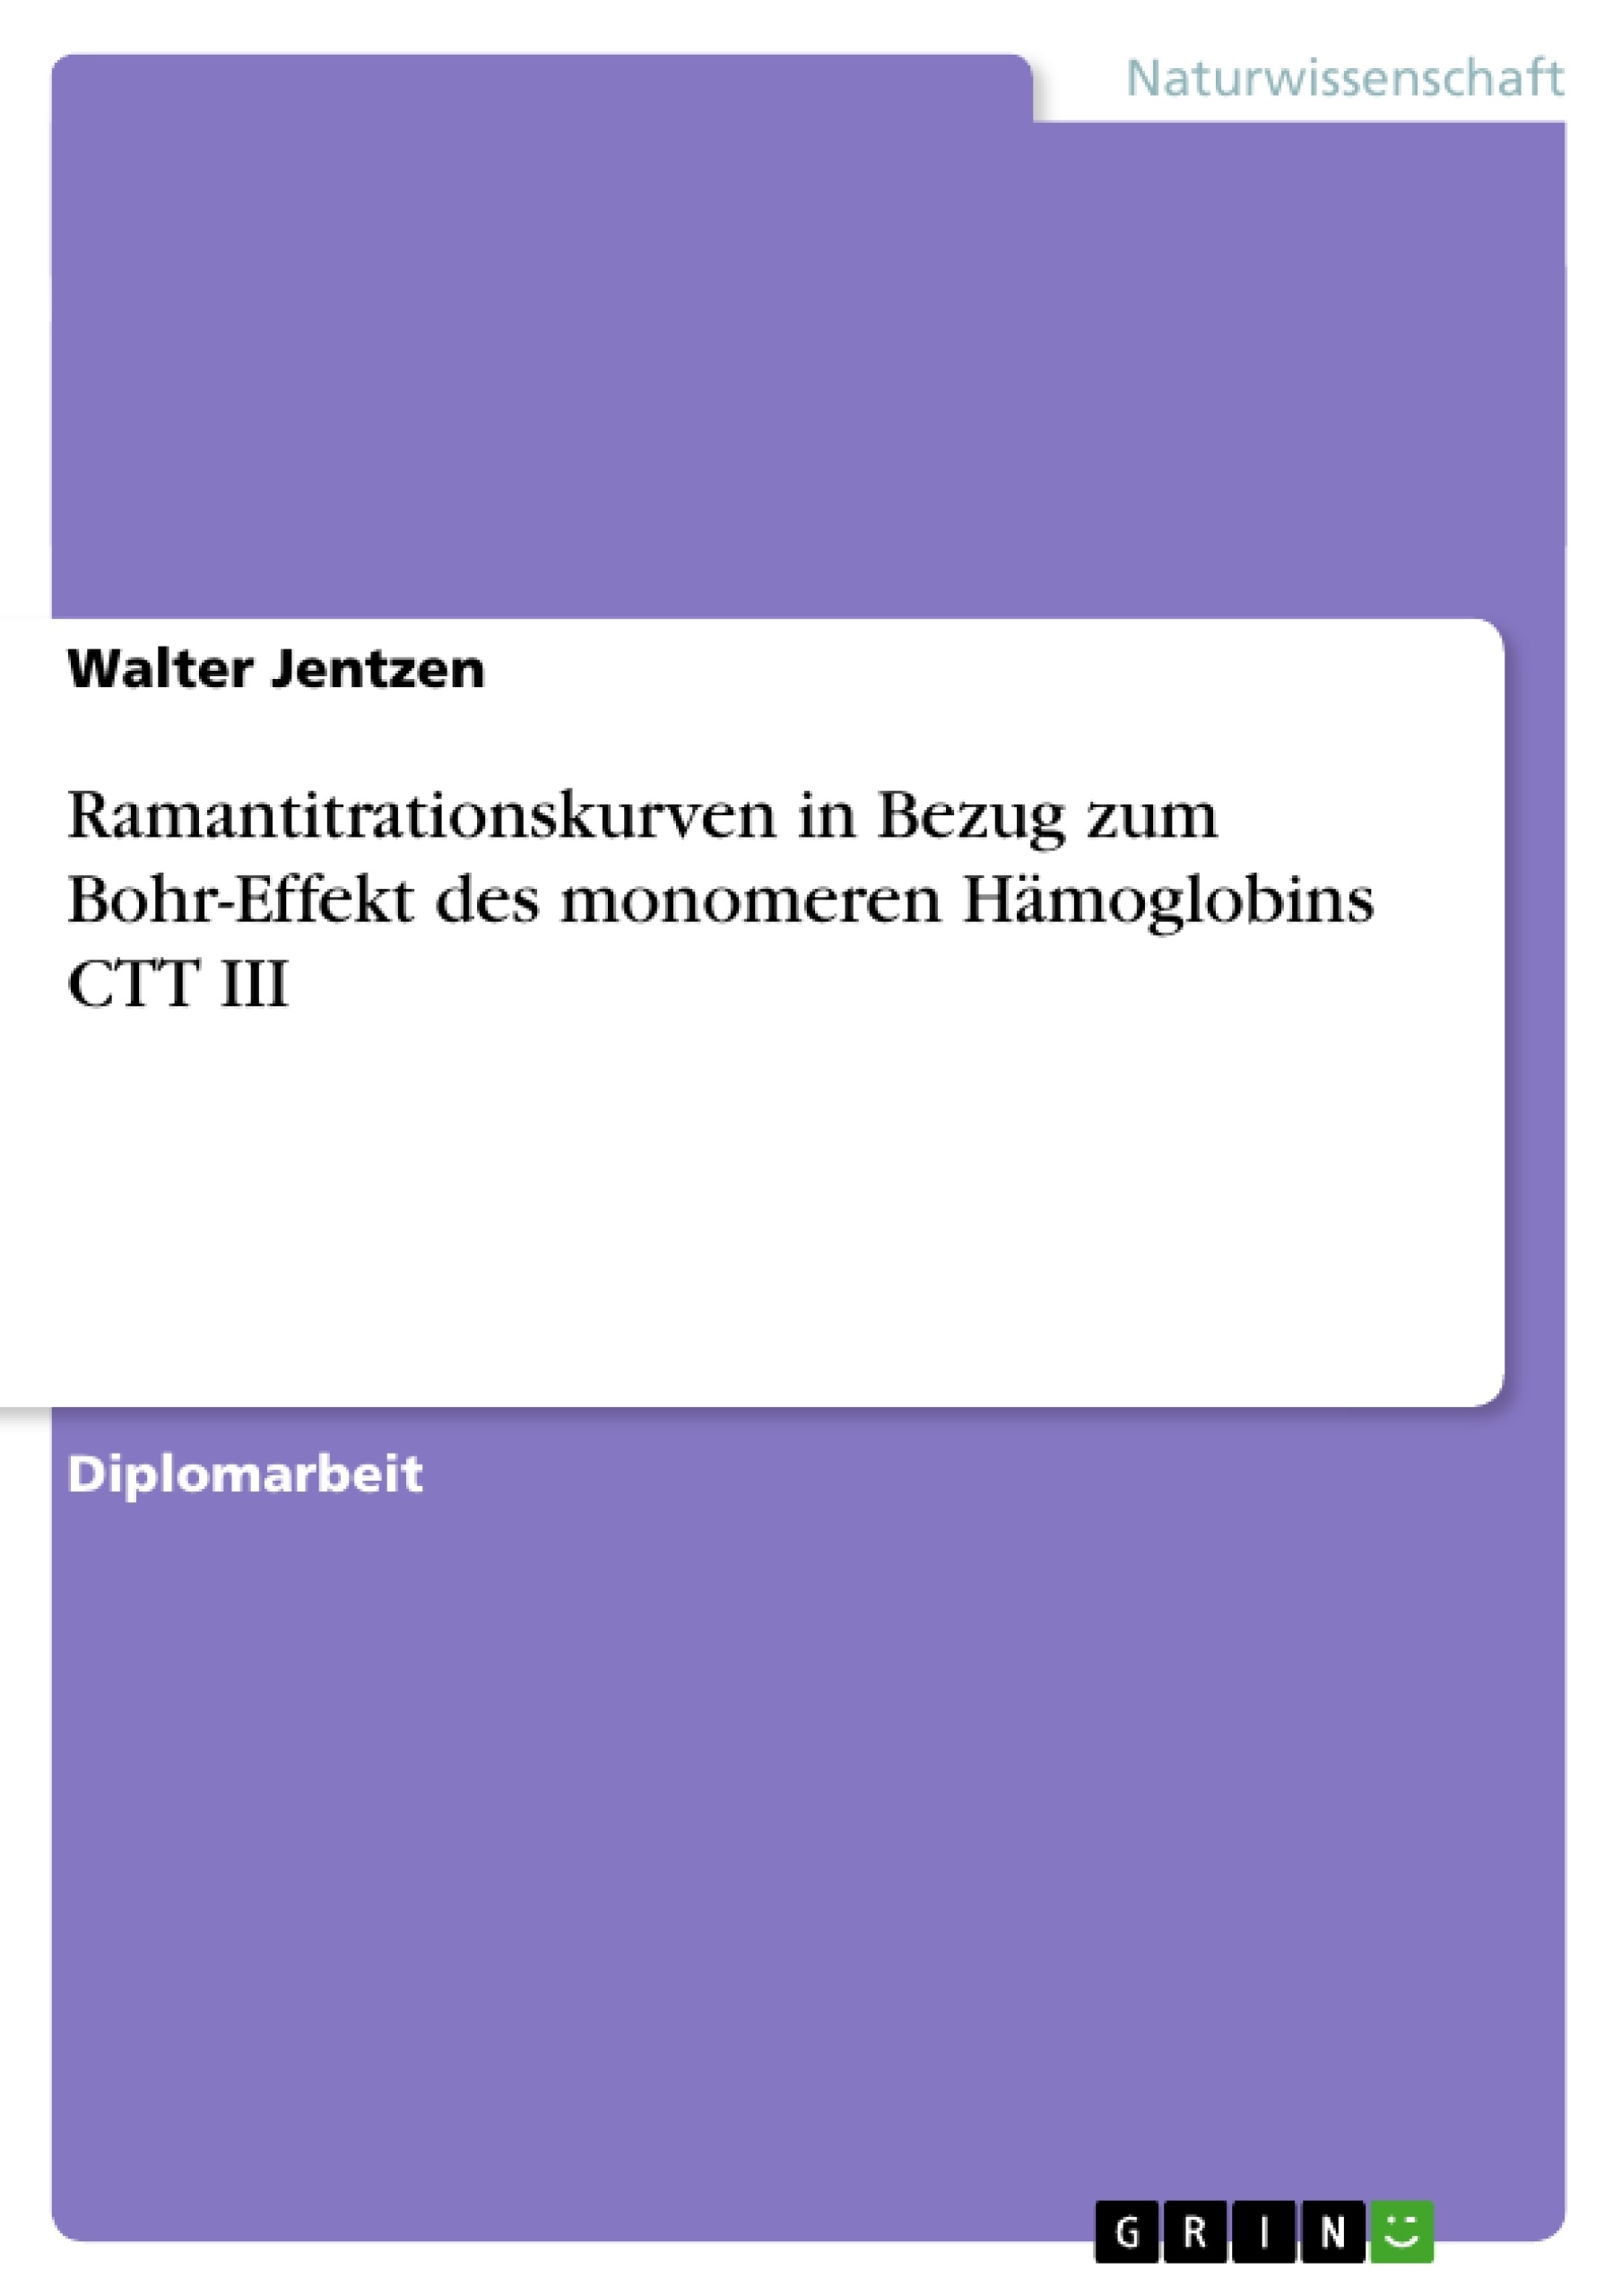 Title: Ramantitrationskurven in Bezug zum Bohr-Effekt des monomeren Hämoglobins CTT III